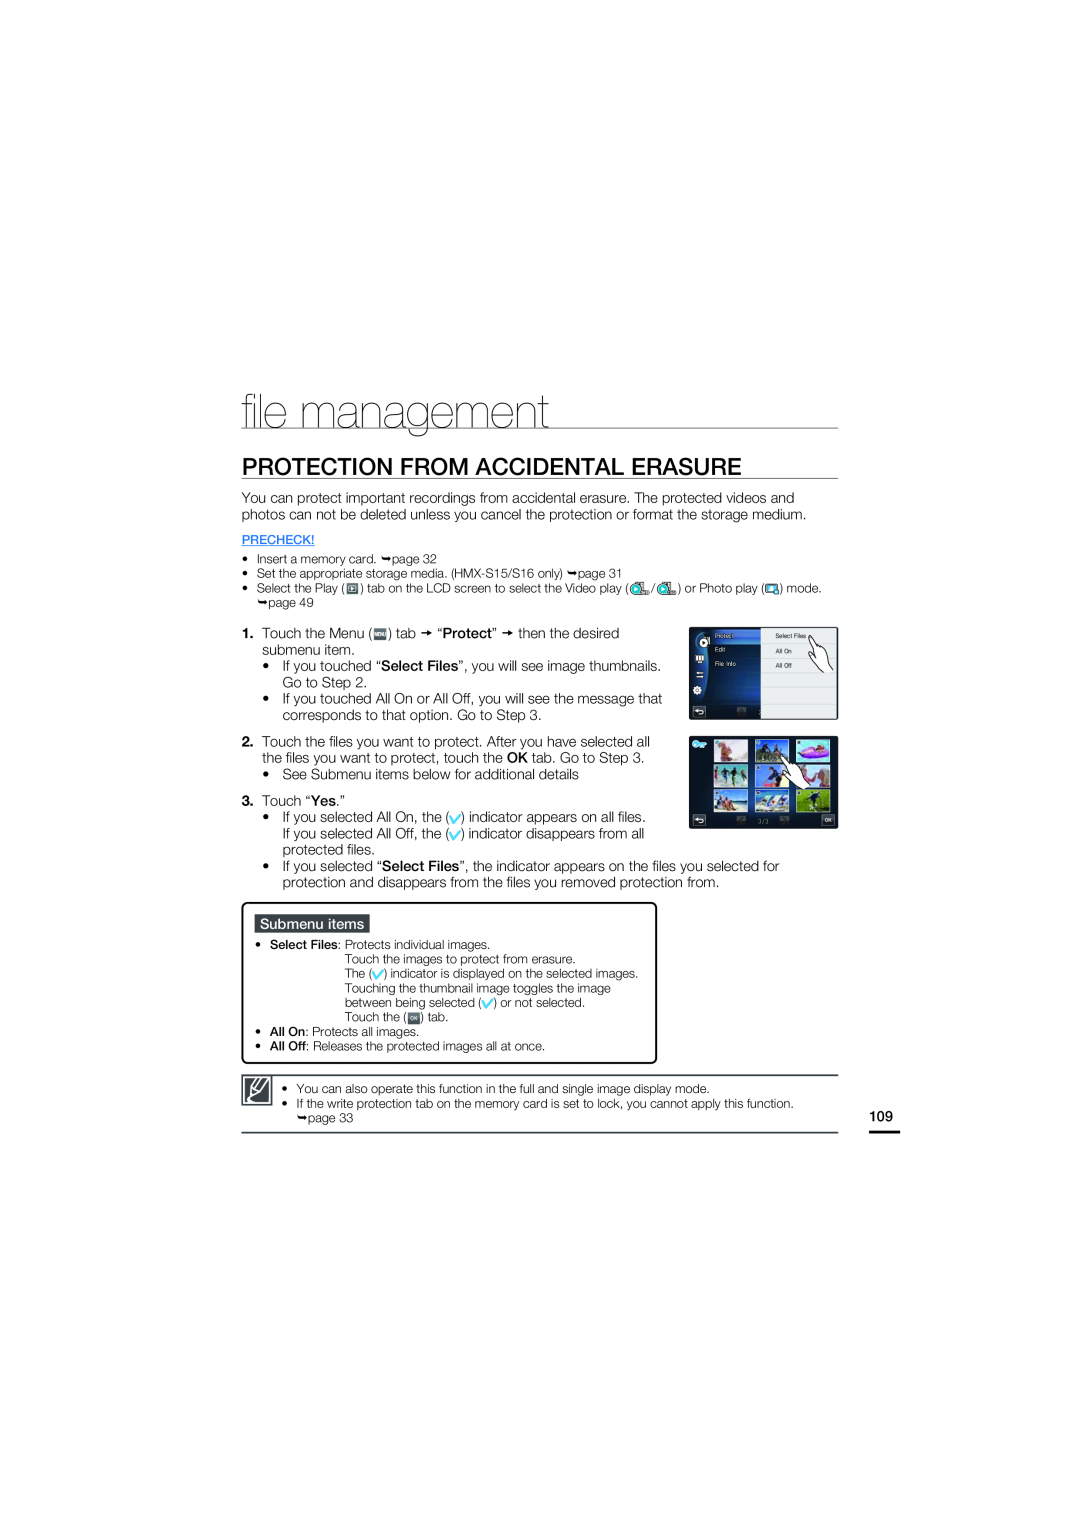 Samsung HMX-S10BN/XAA, HMX-S15BN/XAA manual ﬁle management, Protection From Accidental Erasure, Submenu items 